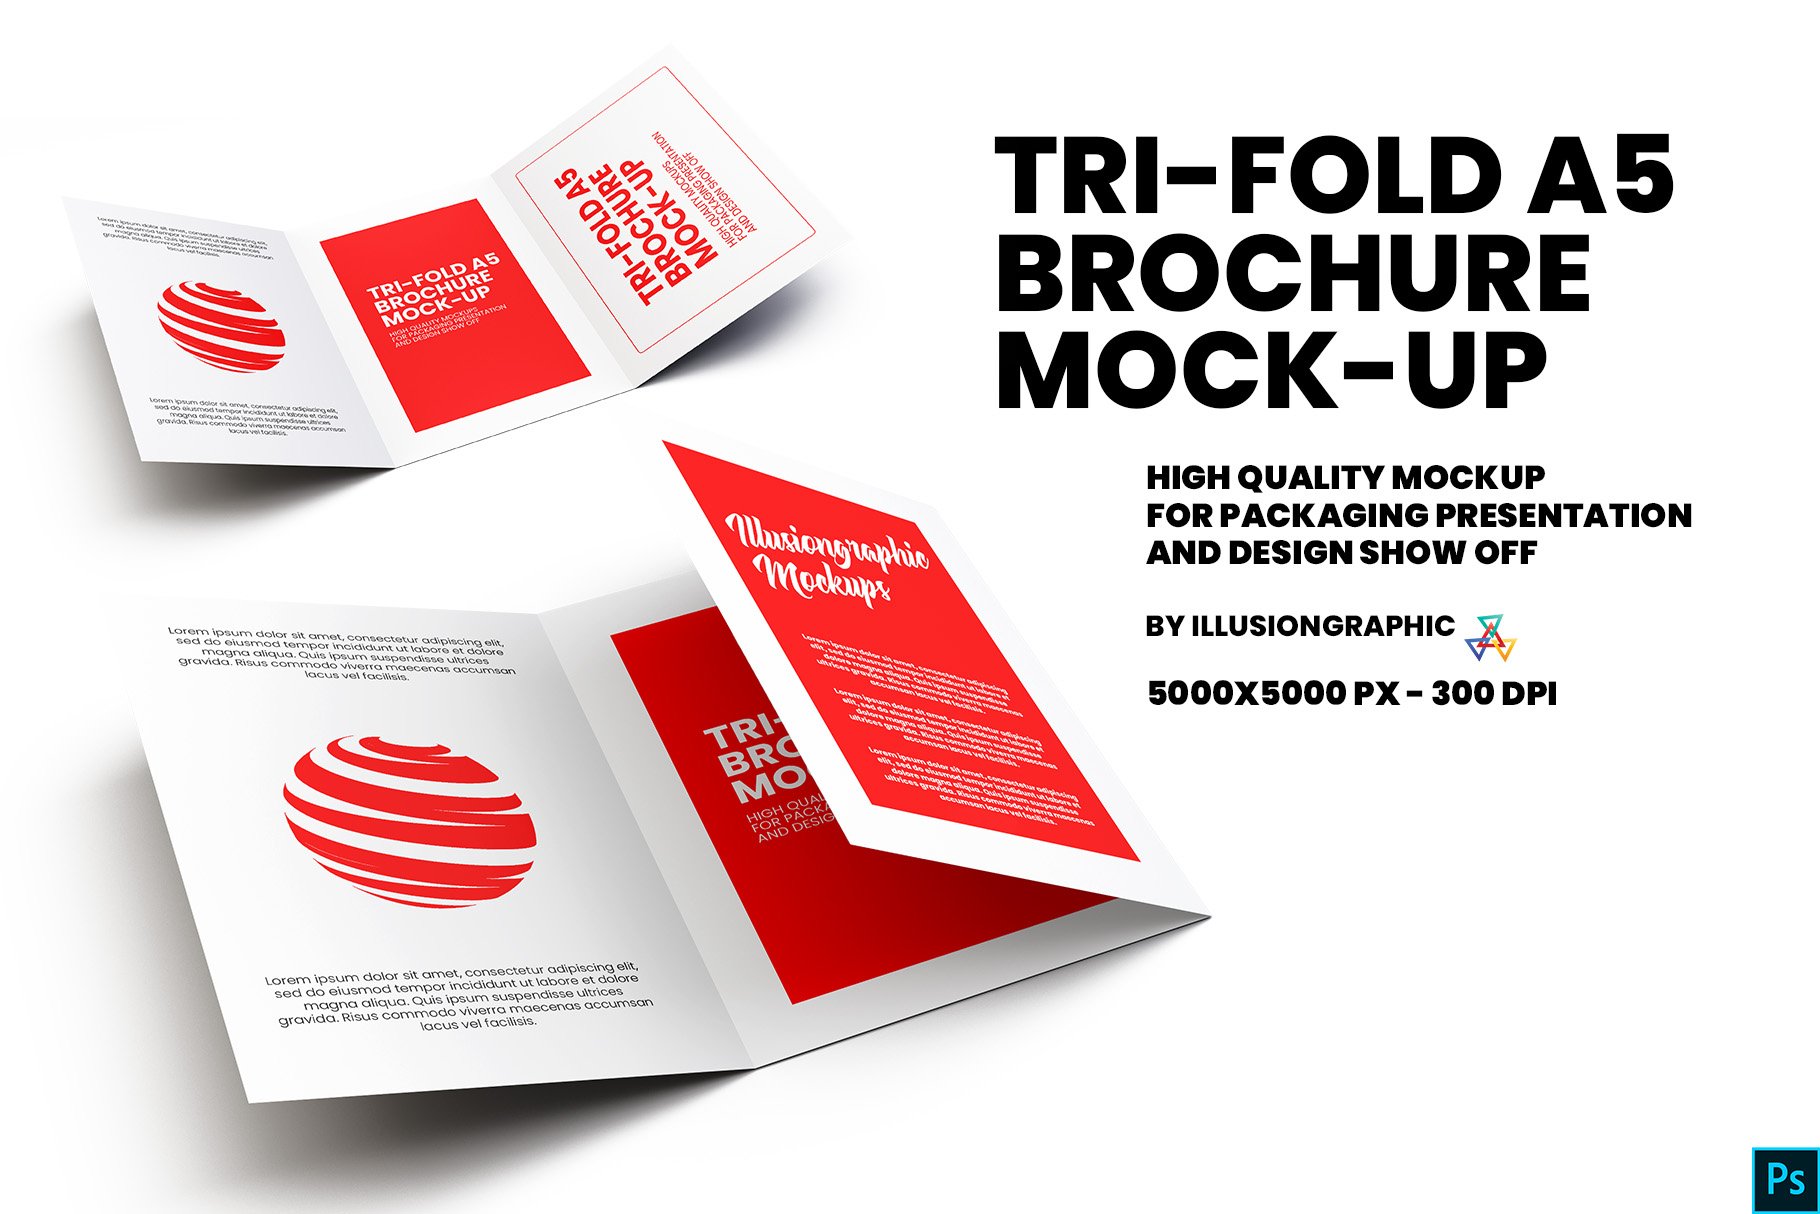 Tri-Fold A5 Brochure Mock-up cover image.